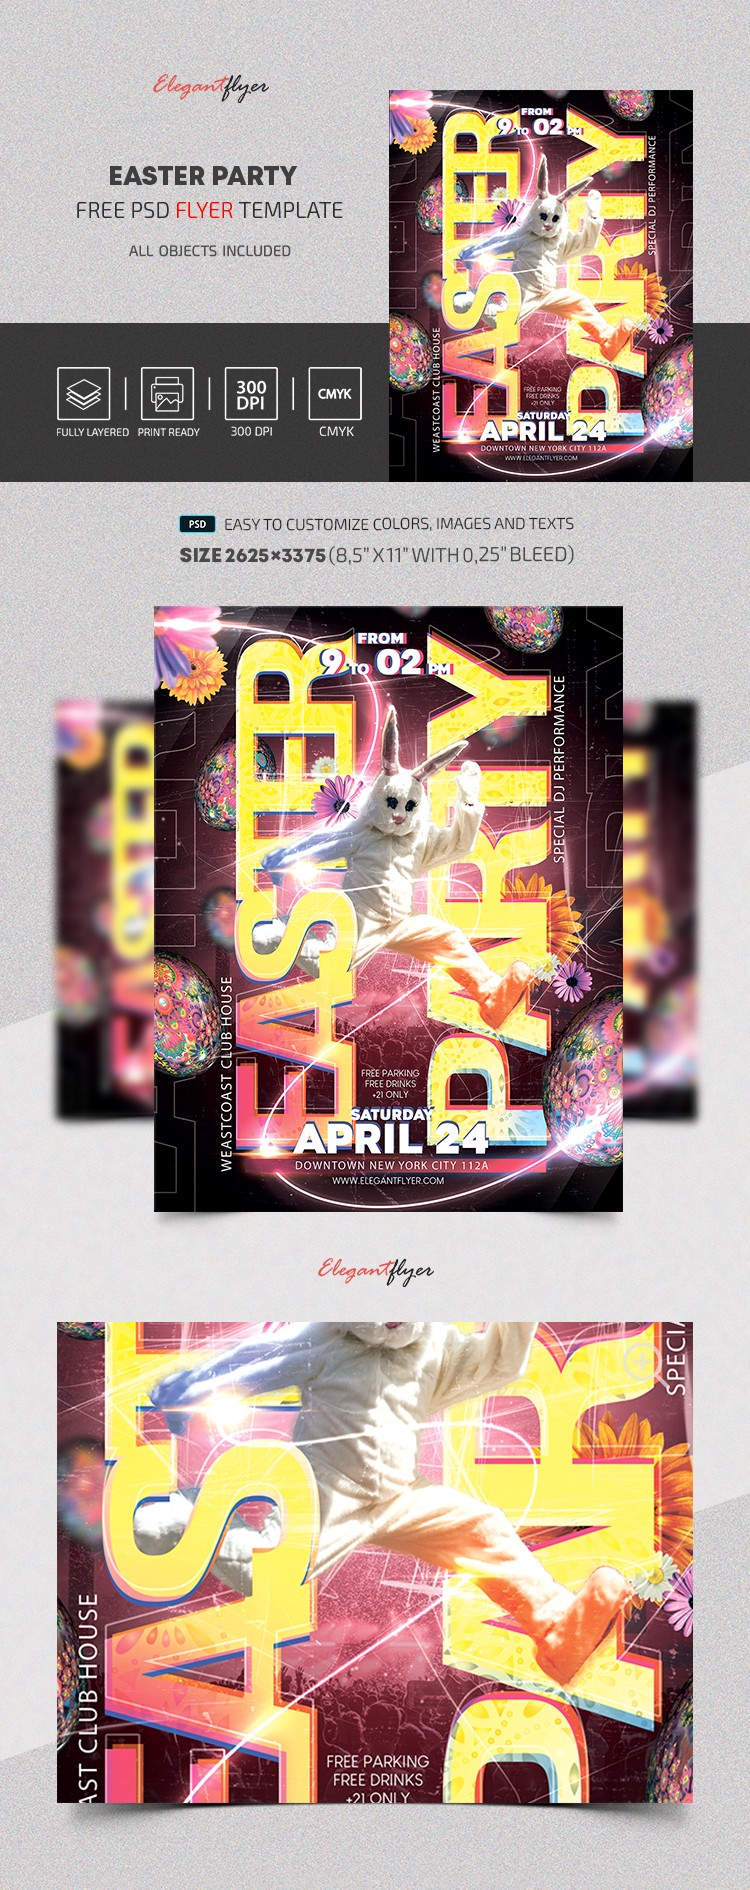 Easter Party Flyer by ElegantFlyer